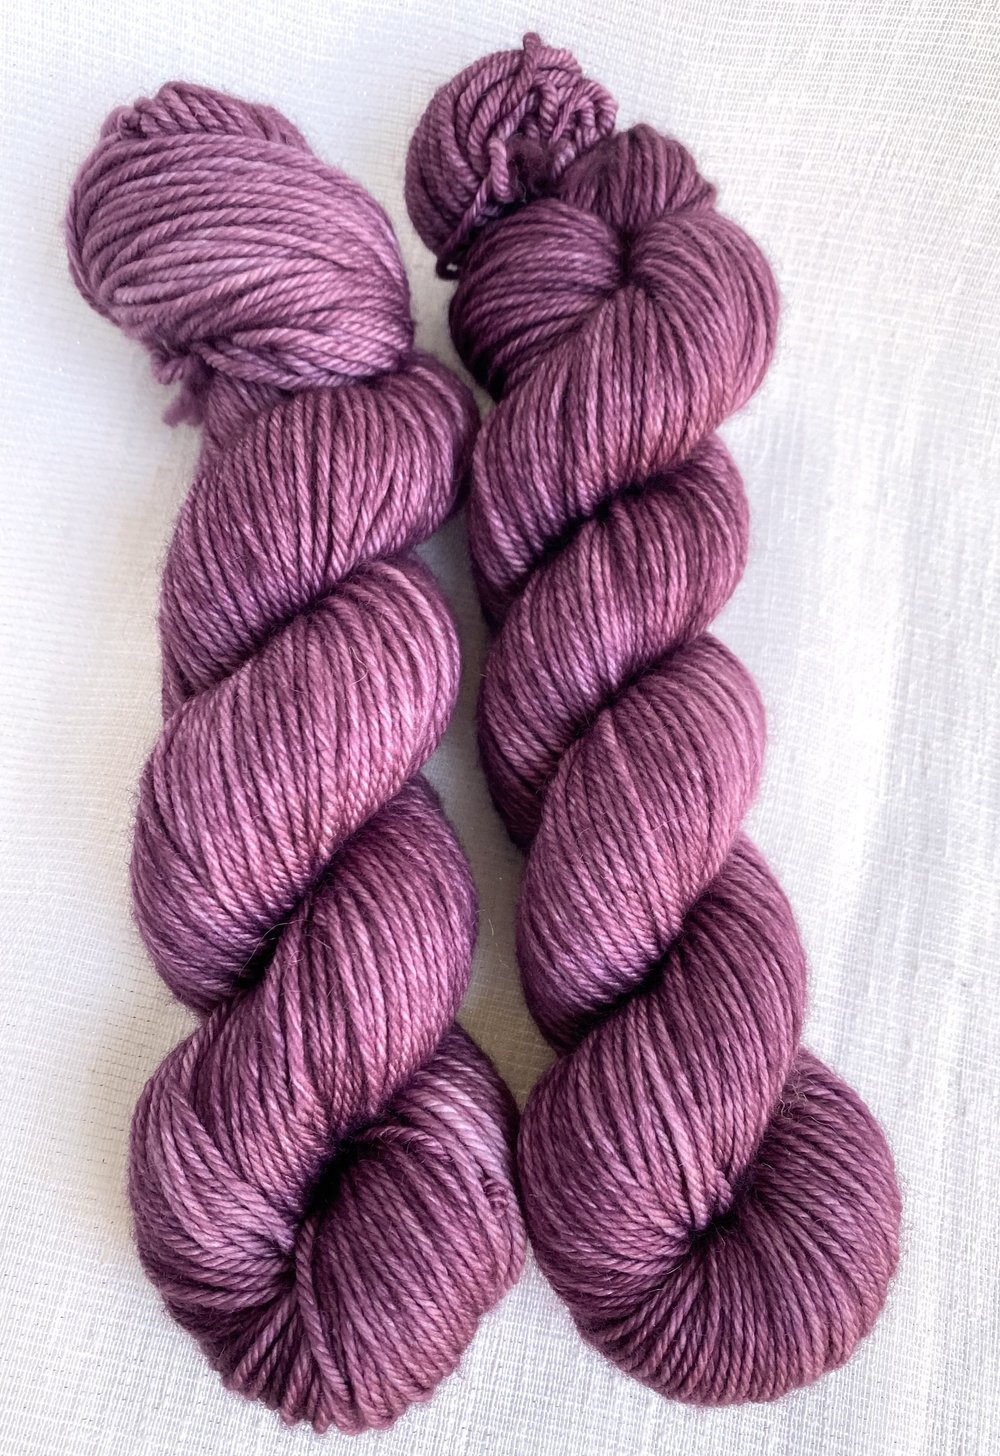 Woolen Delights Heavy Worsted/Aran Weight #4 Yarn for Knitting and Crocheting, Australian Wool Blend, Pack of 3, 522yds/300g (Pumpkin Orange)